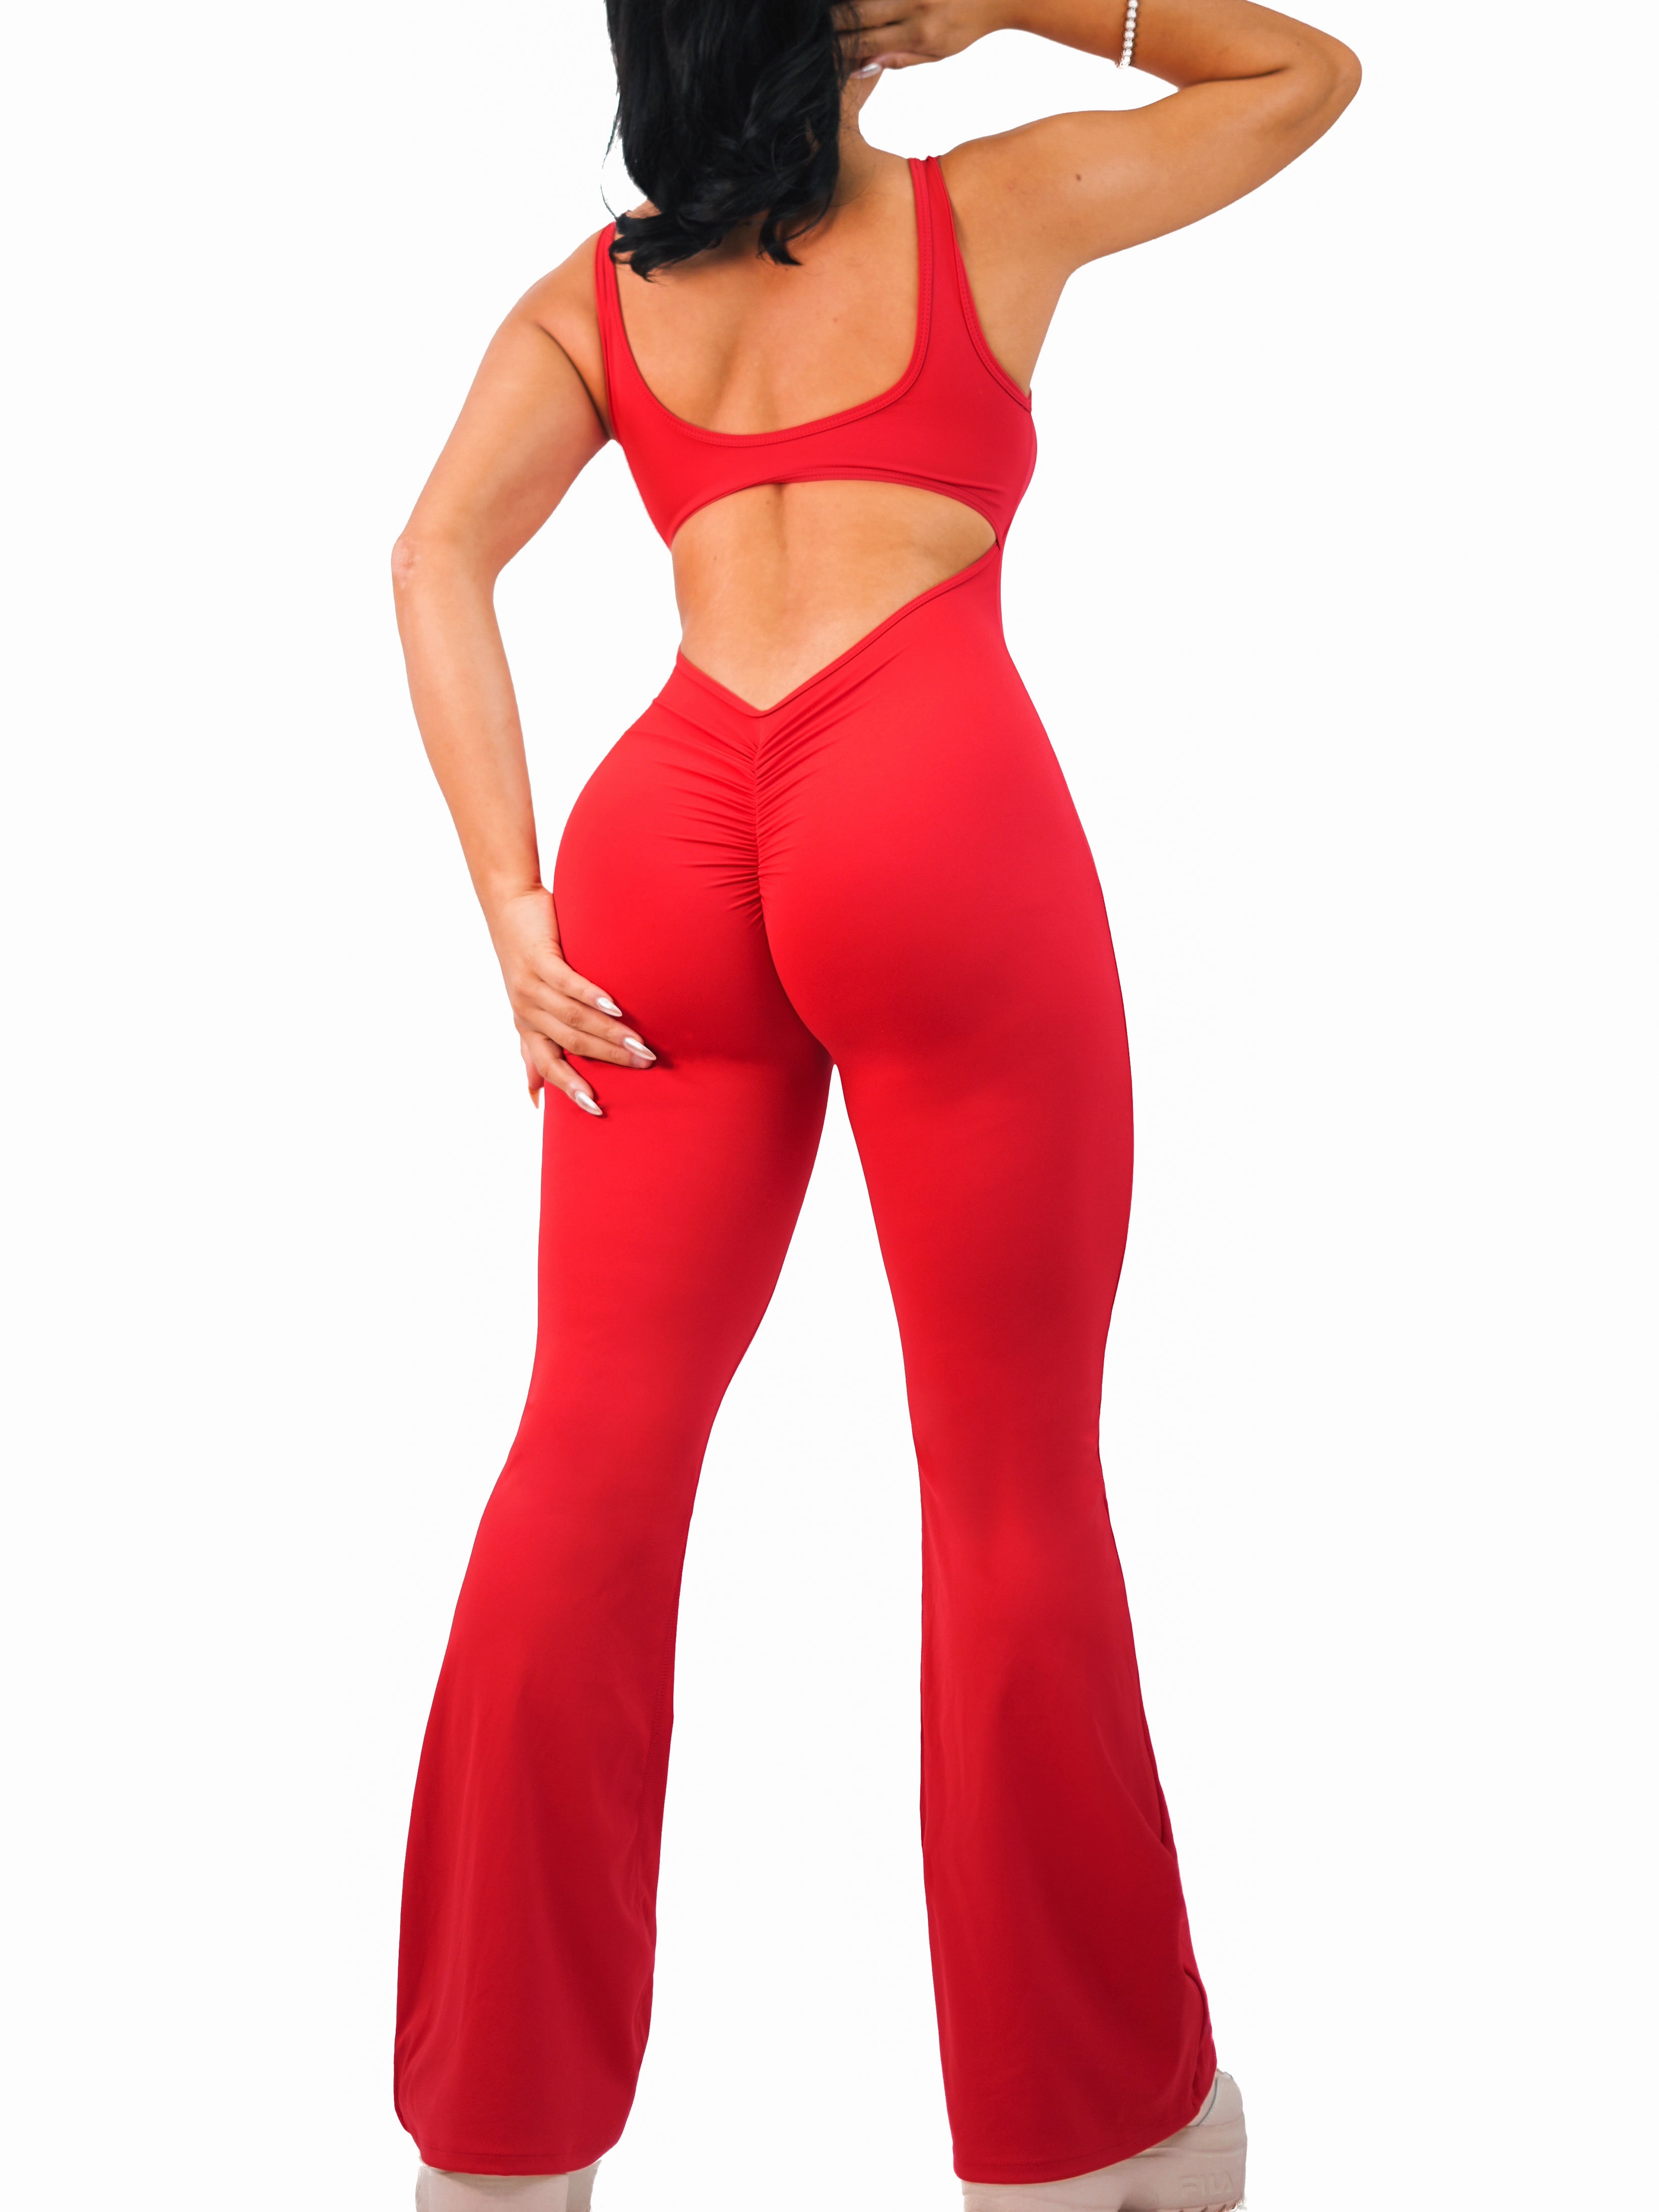 Flare Scrunch Jumpsuit (Scarlet Red)